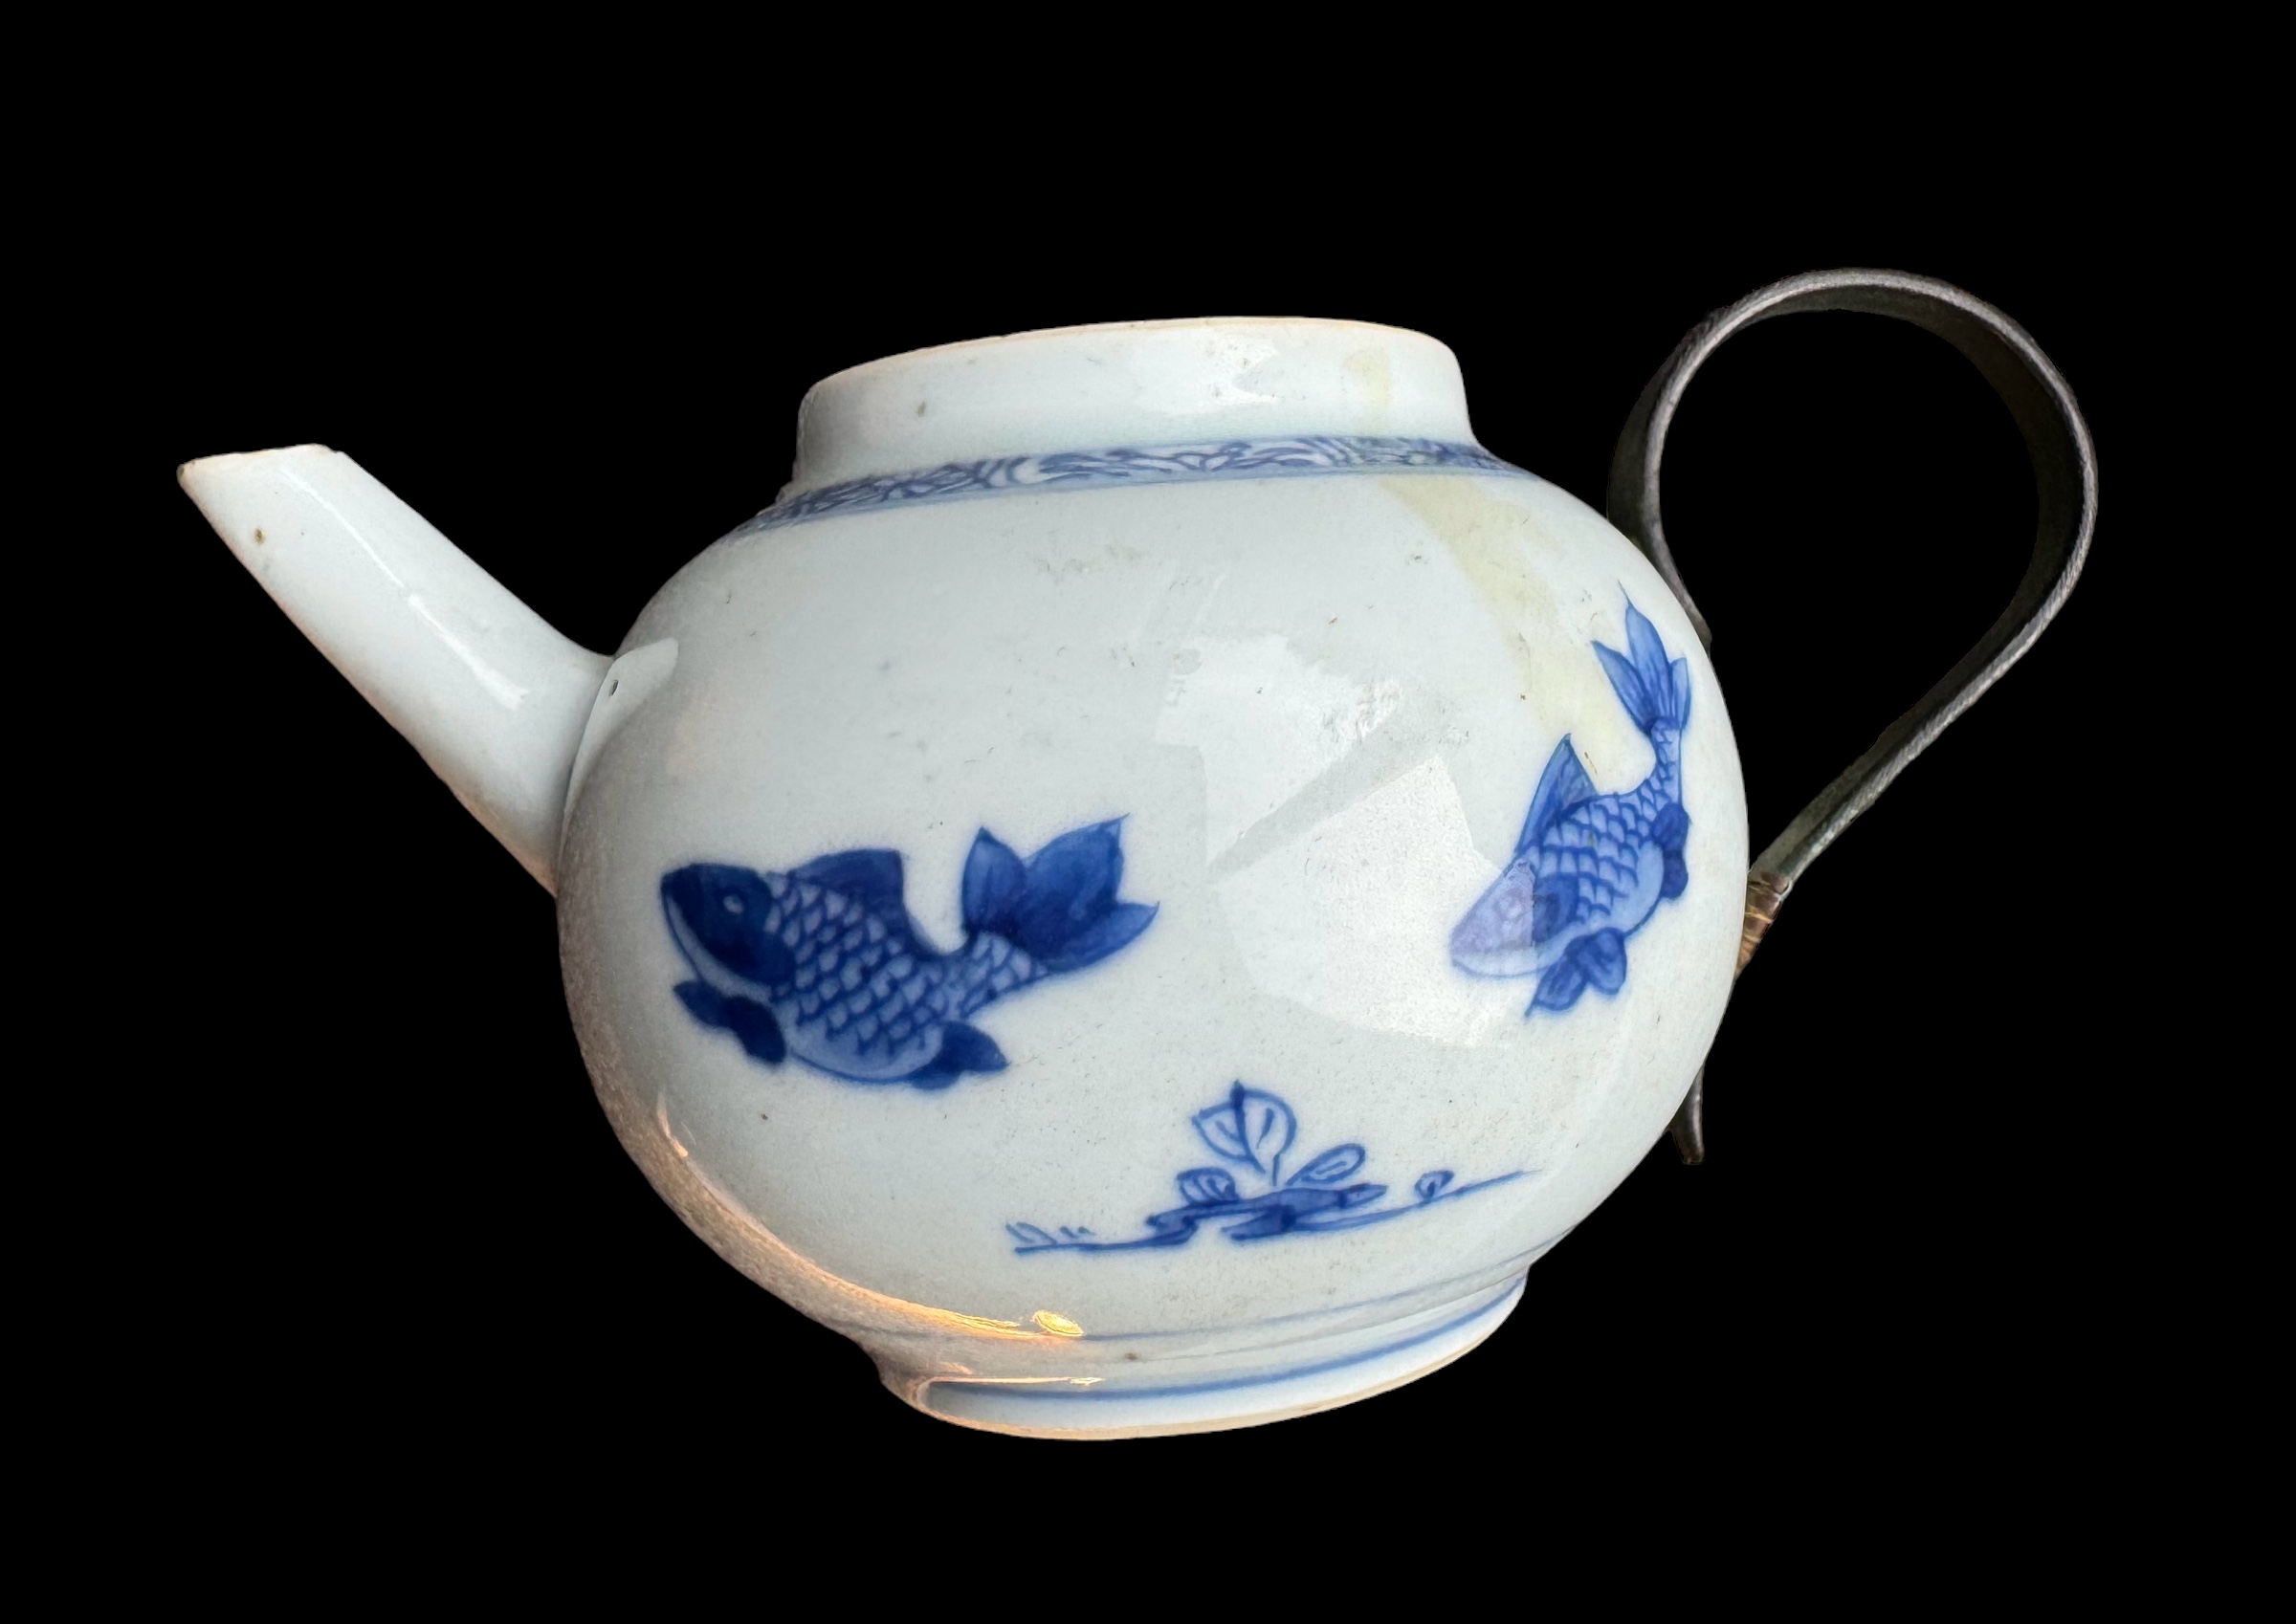 Antique Chinese Kangxi Porcelain Tea Pot 17th-18th Century. £7 UK, (£25 International Post) - Image 4 of 4